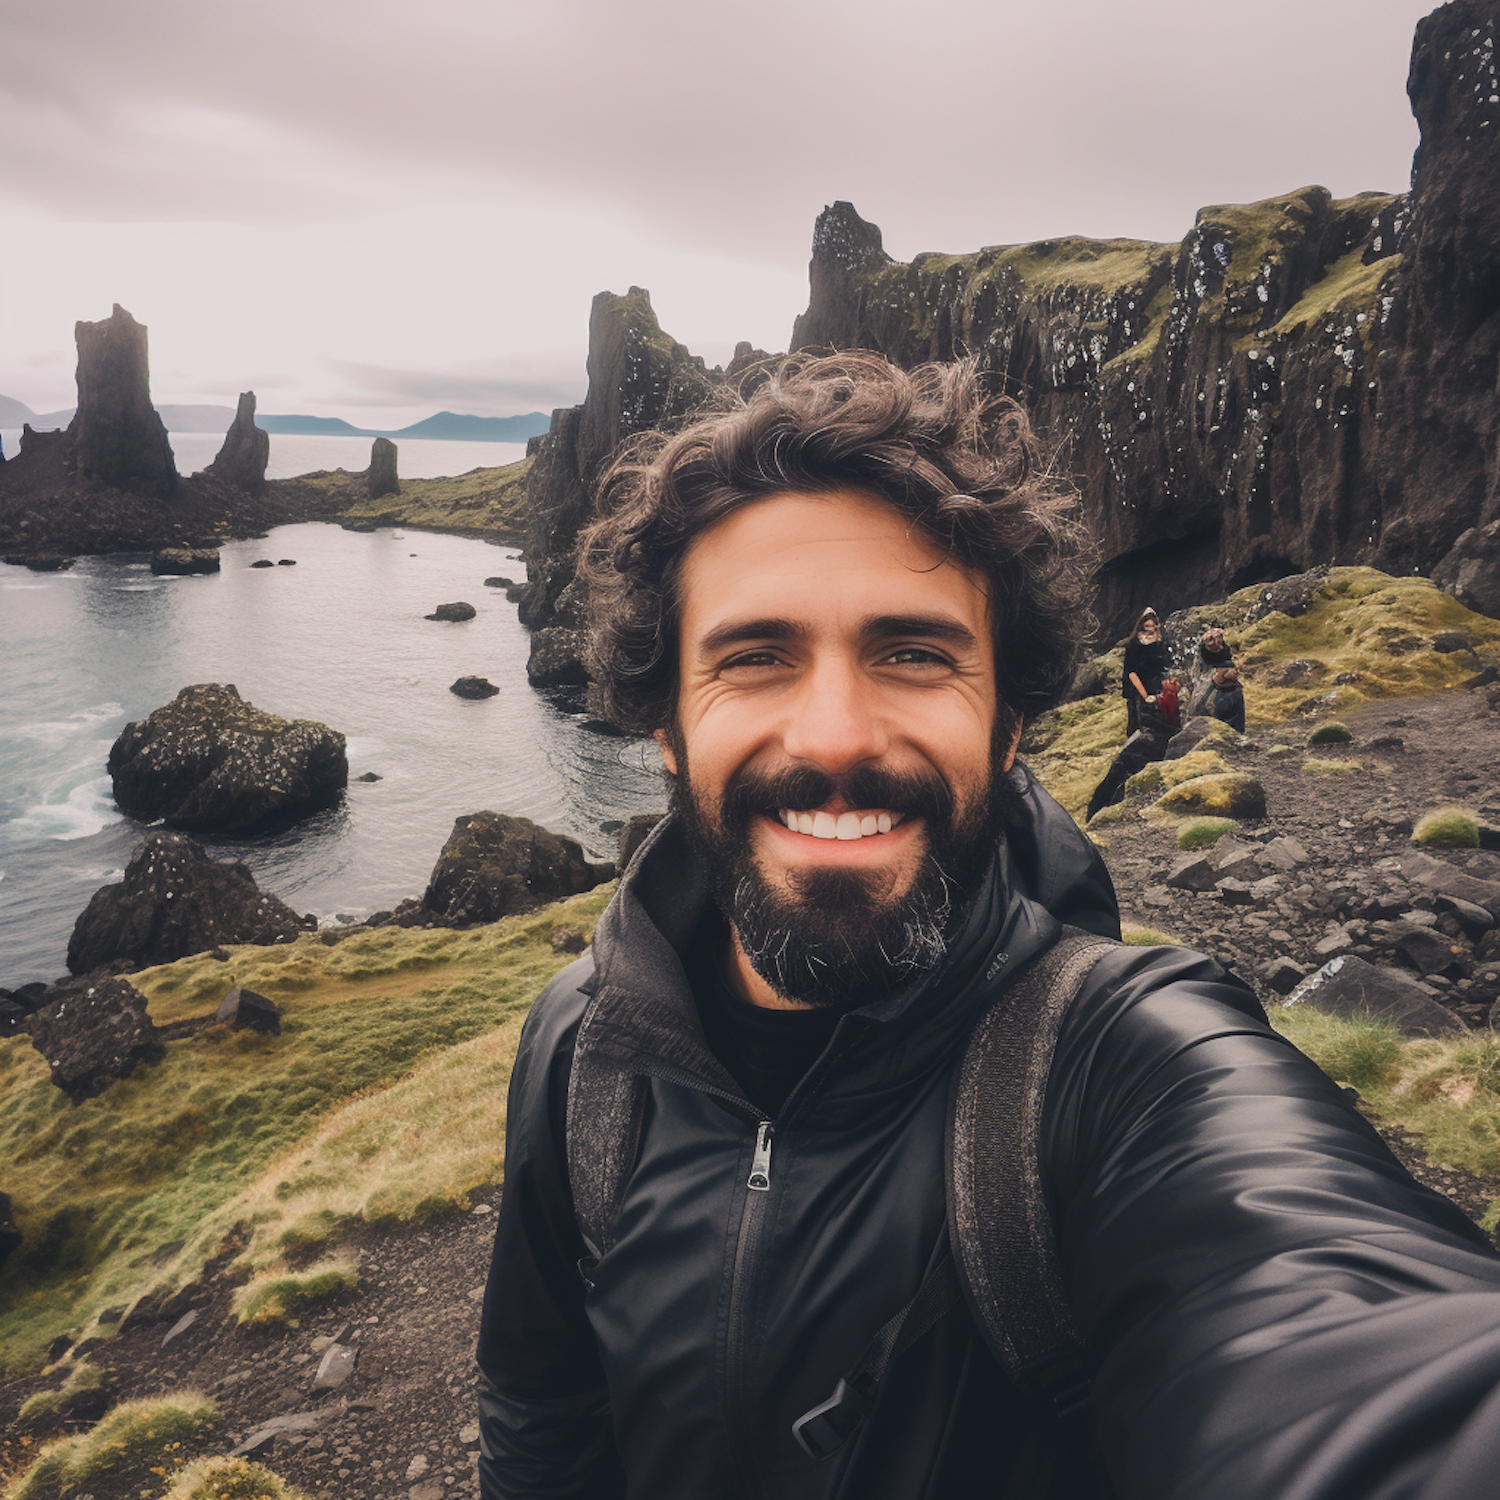 Joyful Explorer in Rugged Terrain Selfie